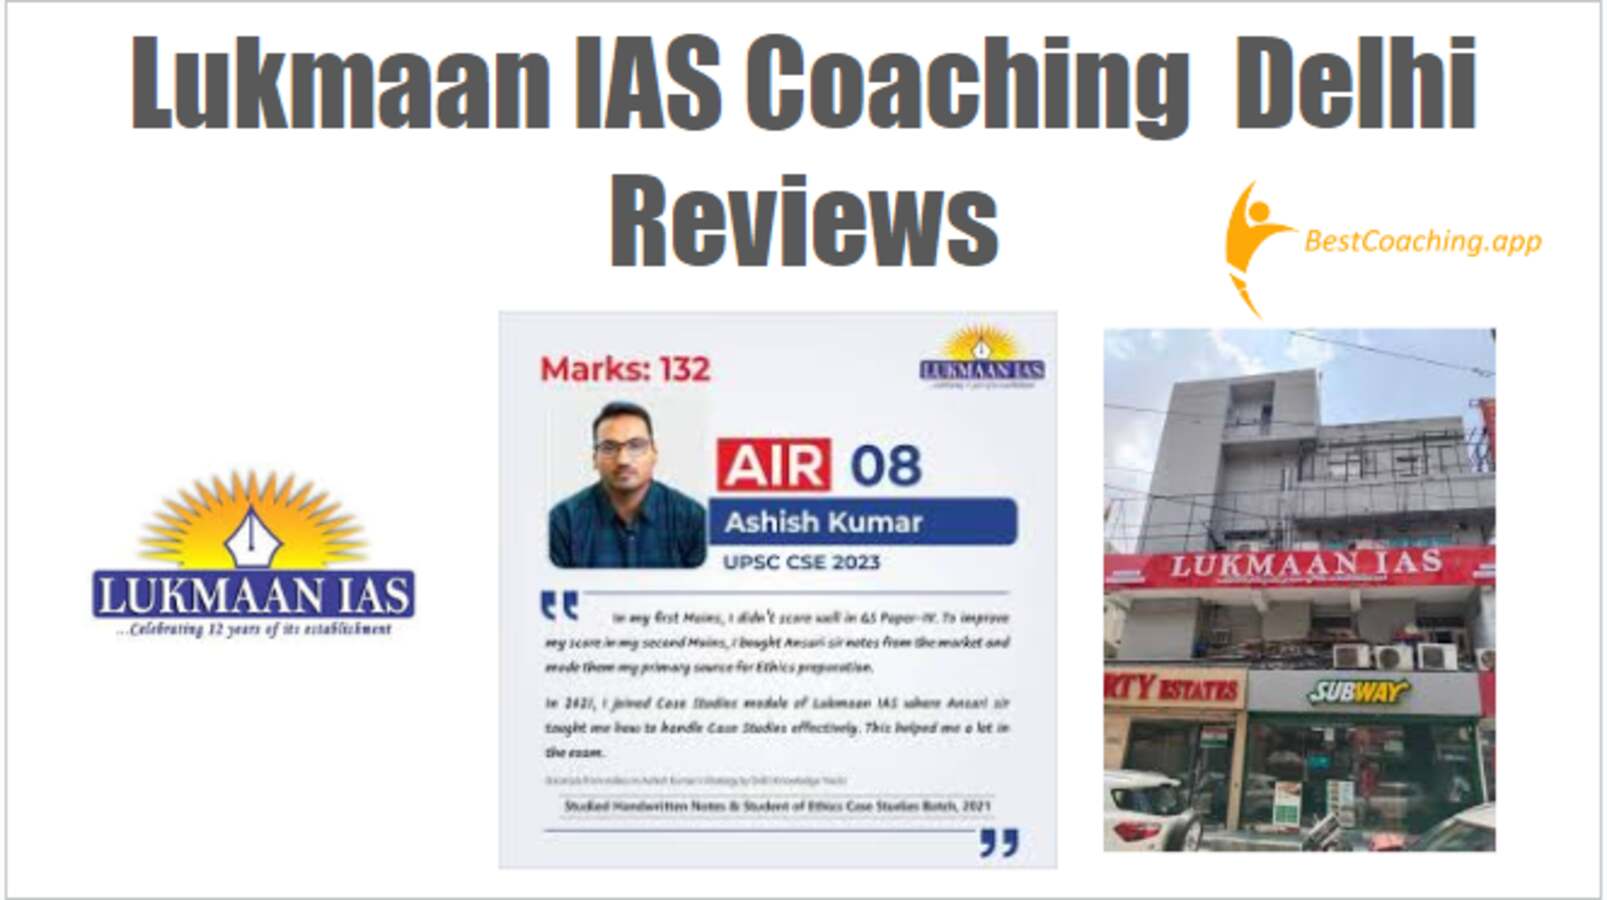 Lukmaan IAS Coaching Delhi Reviews